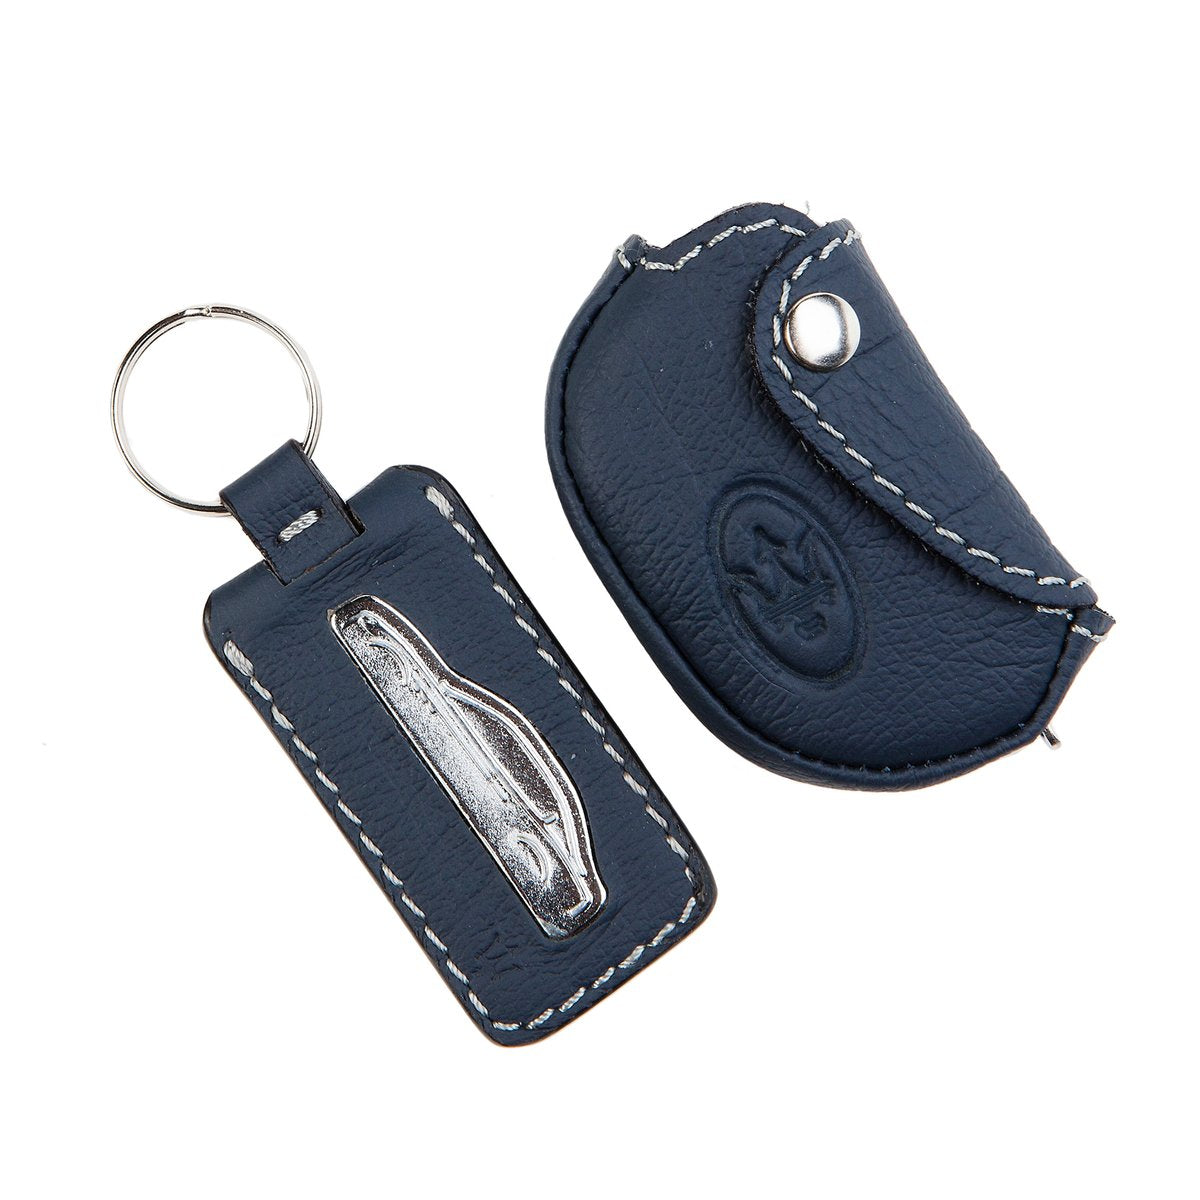 AKIYHIEI TPU Key Fob Case Cover for Maserati,Key Holder Replacement for Maserati Ghibli, Levante, Quattroporte Remote Start, 4-Button Key Cover Car